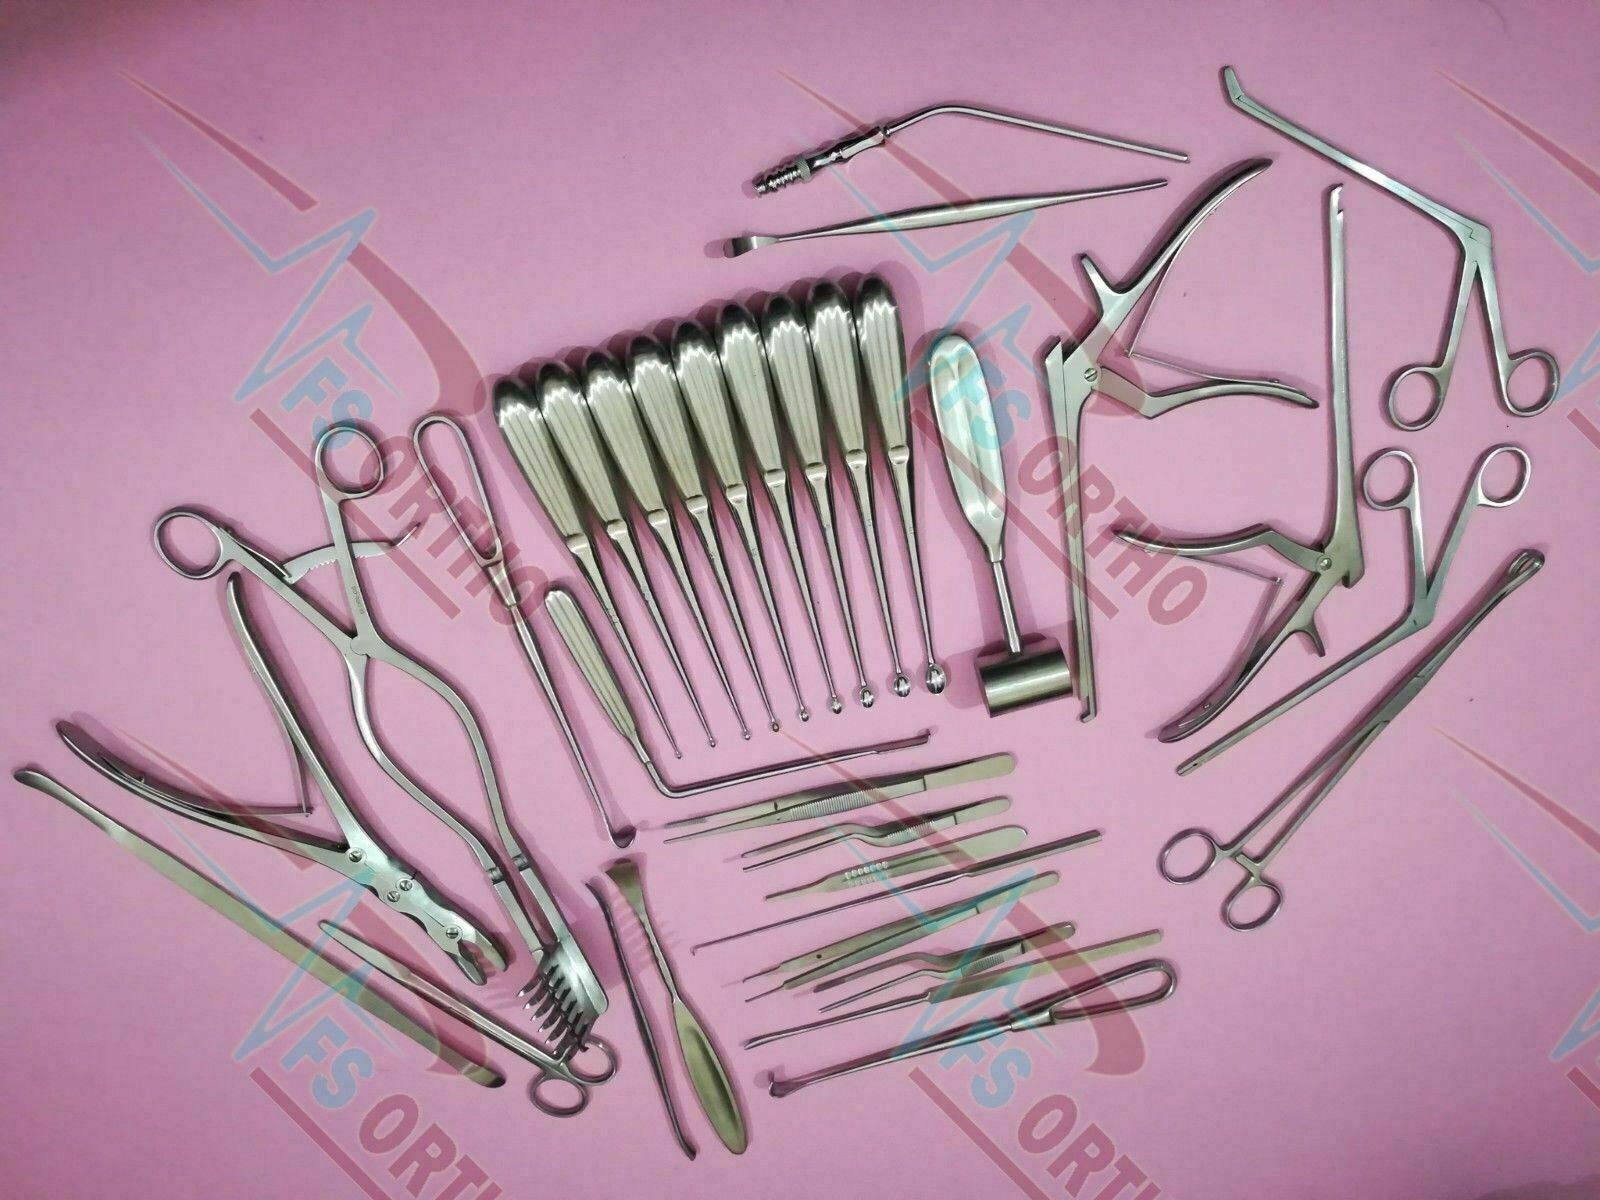 Laminectomy Set 35 Pcs Surgical Orthopedic Surgical Surgery Instruments